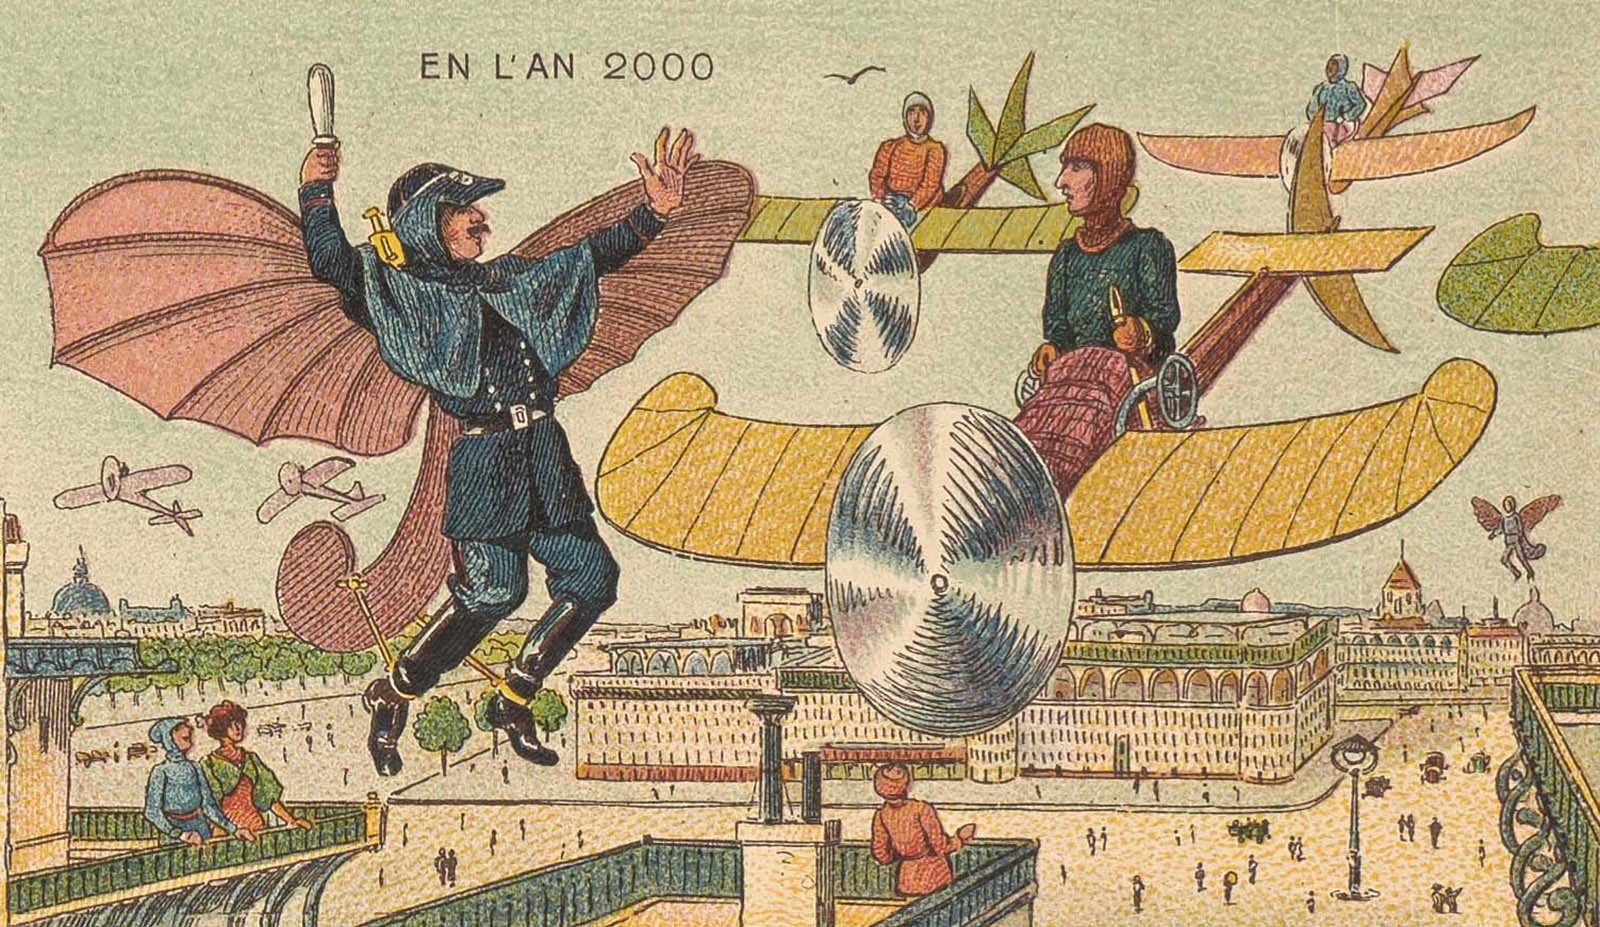 french-postcards-prediction-world-year-2000 (9) (1).jpg